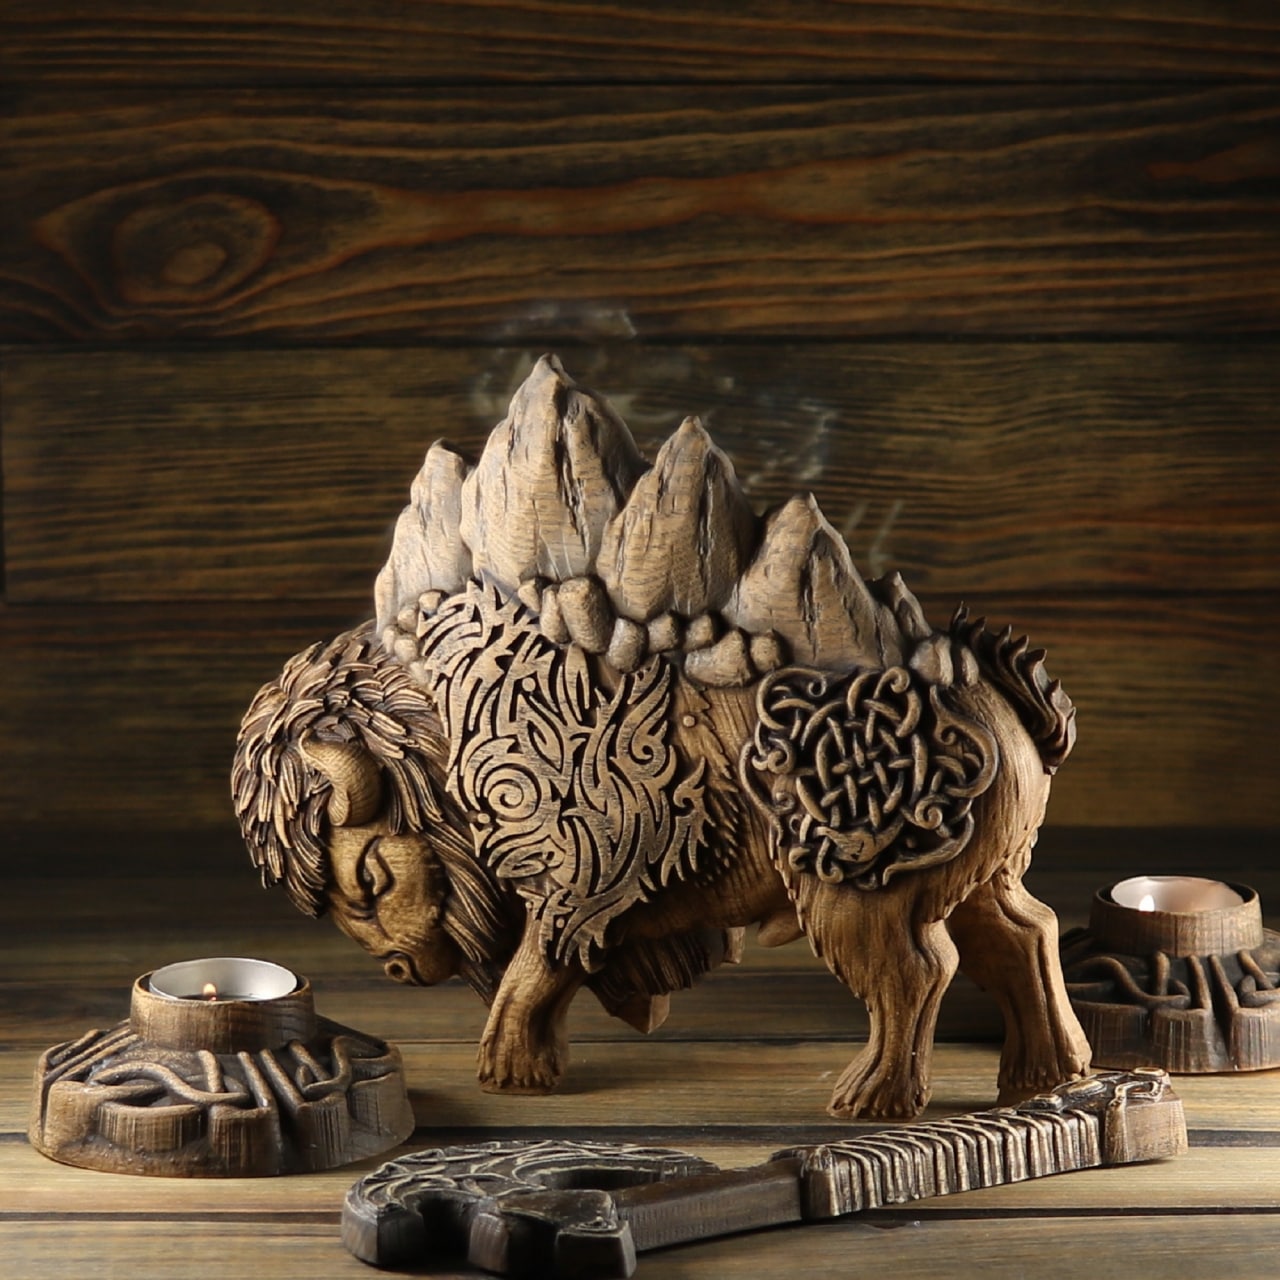 Buffalo, Bison figurine, wooden statue